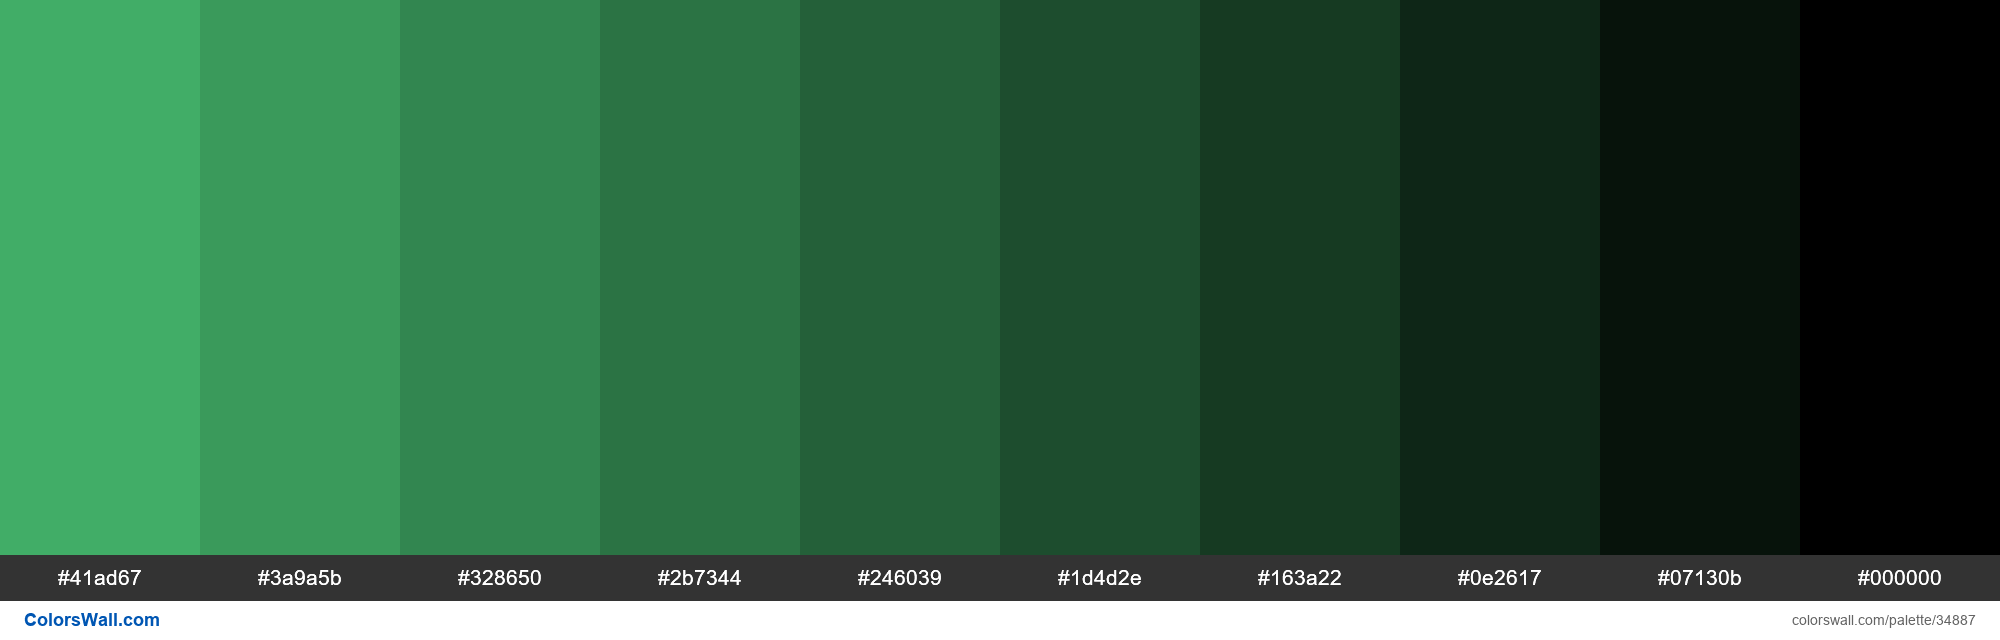 Shades Xkcd Color Dark Mint 48c072 Hex 34887 Colorswall 